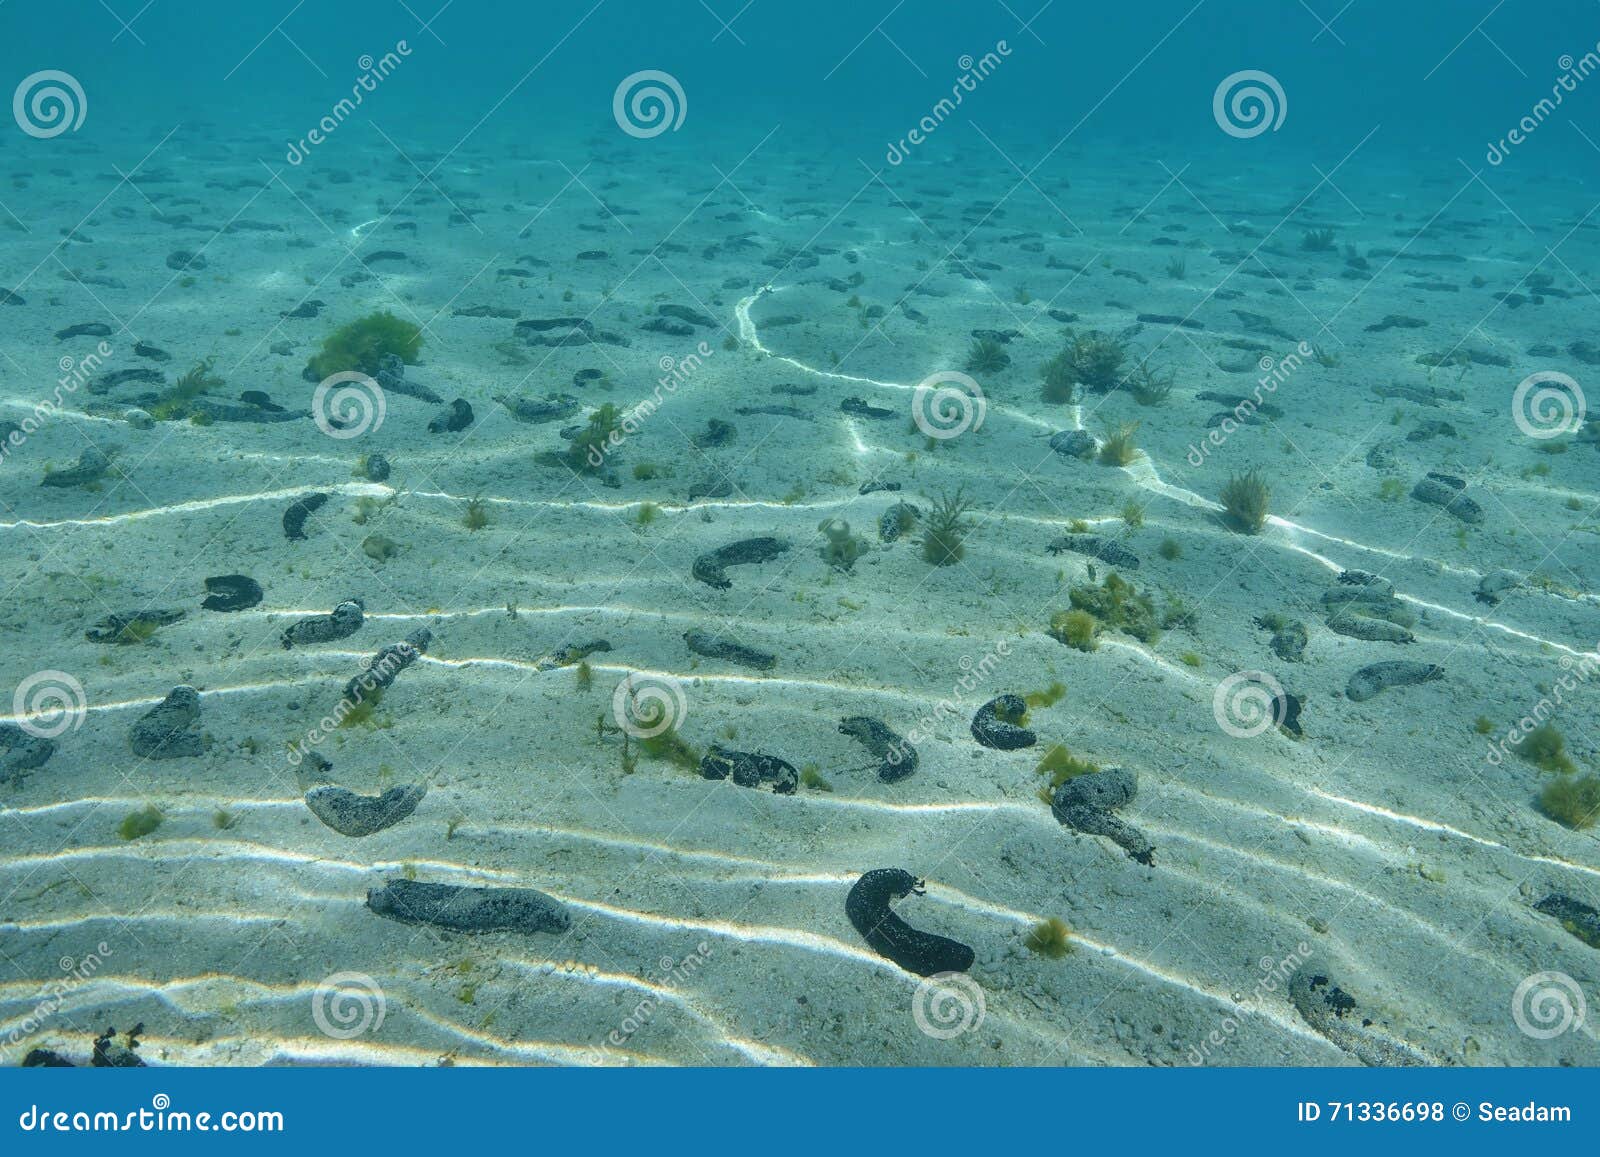 Sandy Ocean Floor With Many Sea Cucumbers Stock Photo Image Of